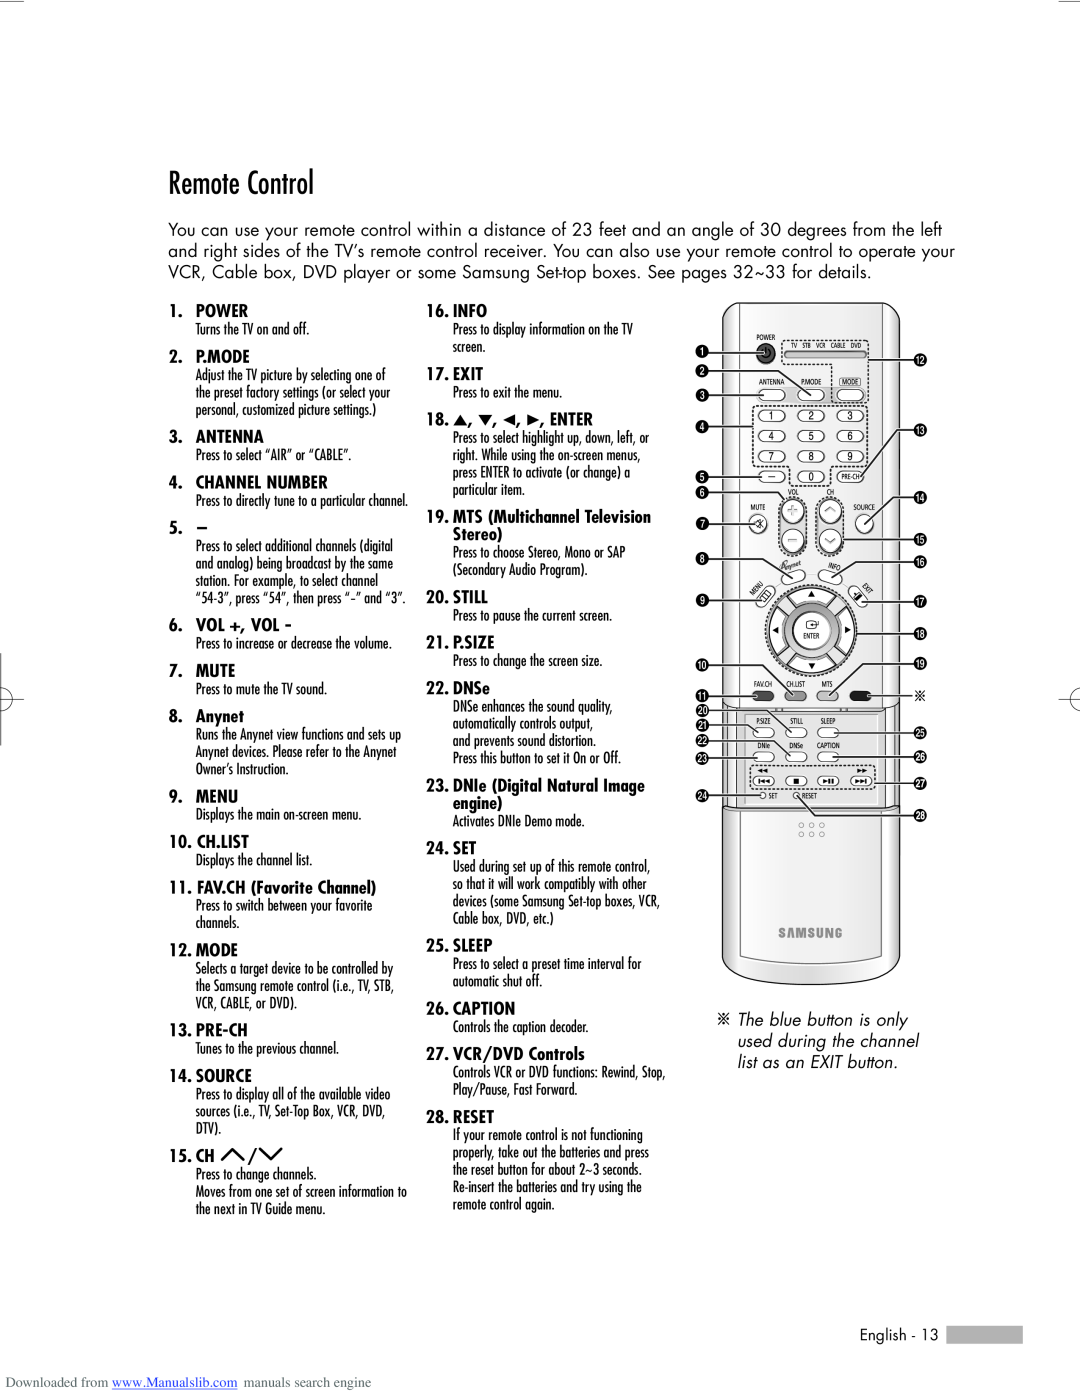 Samsung HL-R5656W Remote Control, Power, 2. P.MODE, Antenna, Channel Number, Vol +, Vol, Mute, Anynet, Menu, 10. CH.LIST 